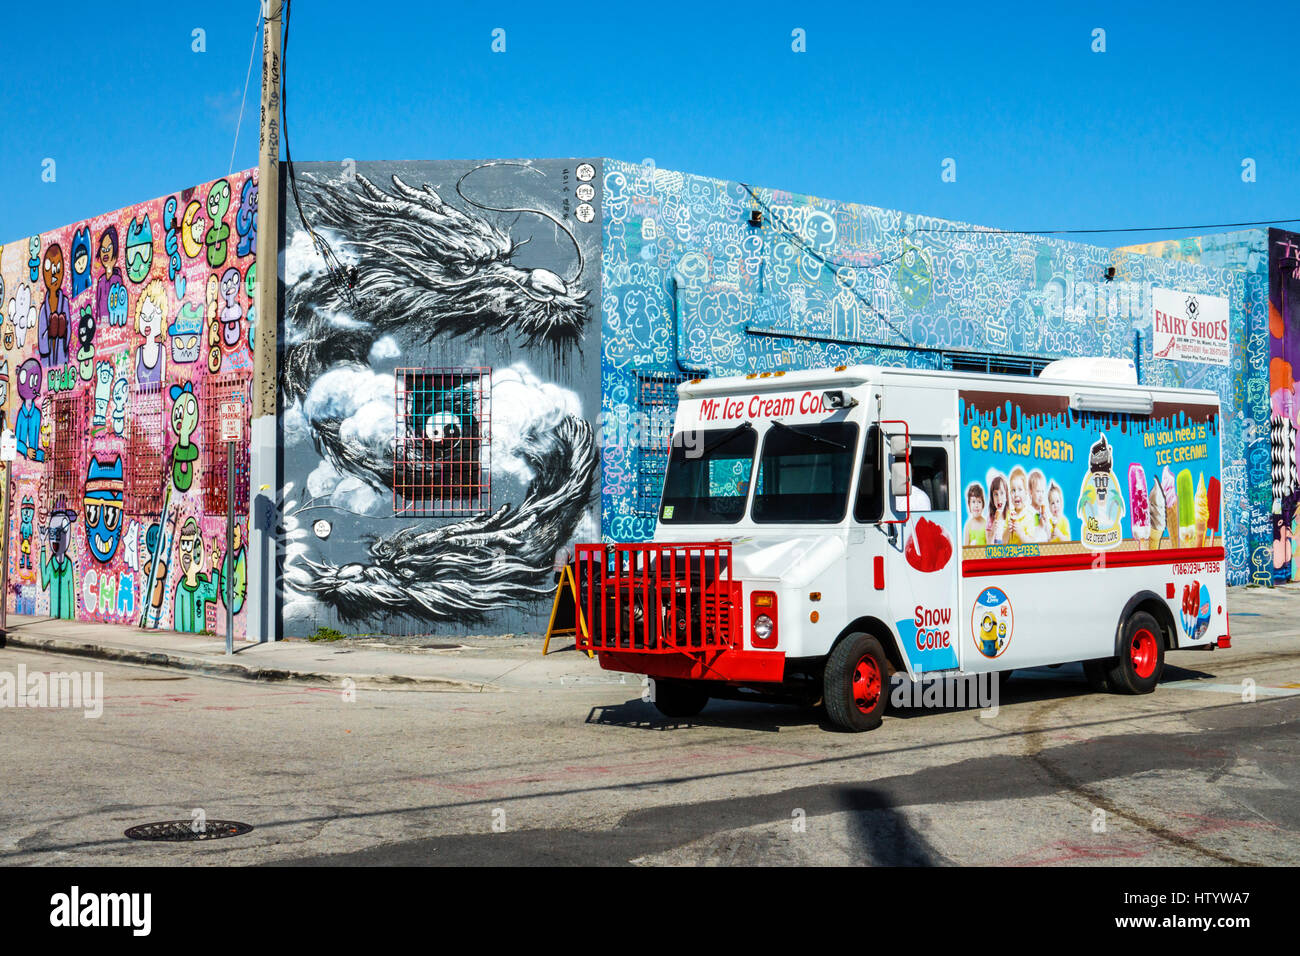 Miami Florida,Wynwood,urban graffiti,street art,painted wall mural,ice cream truck,FL170122041 Stock Photo